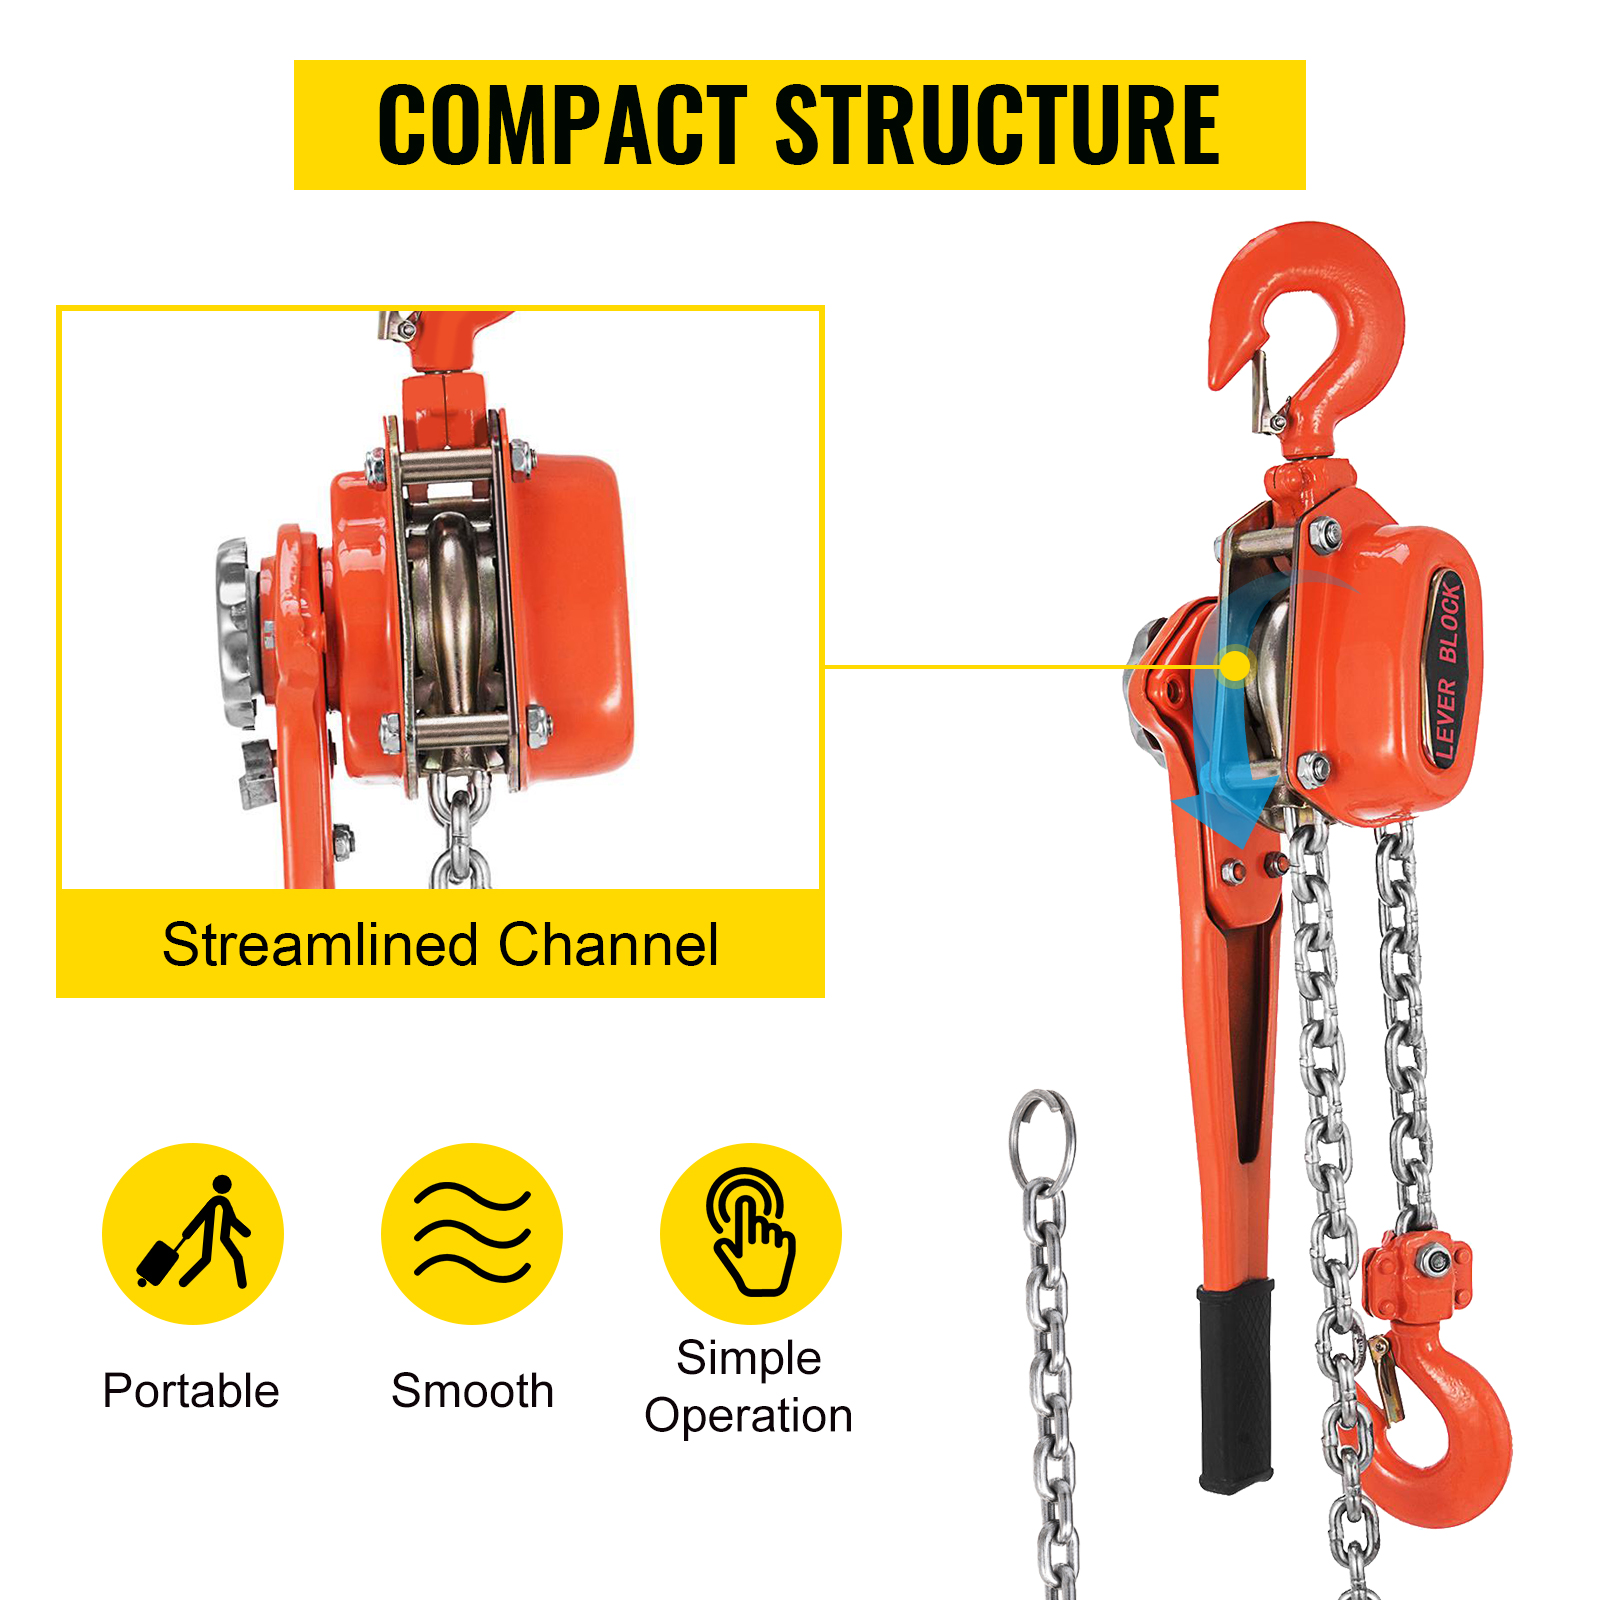 Chain Lever Hoist Come Along Ratchet Lift 3.0 Ton Capacity $0 SHIP 5',10',20'  FT | eBay